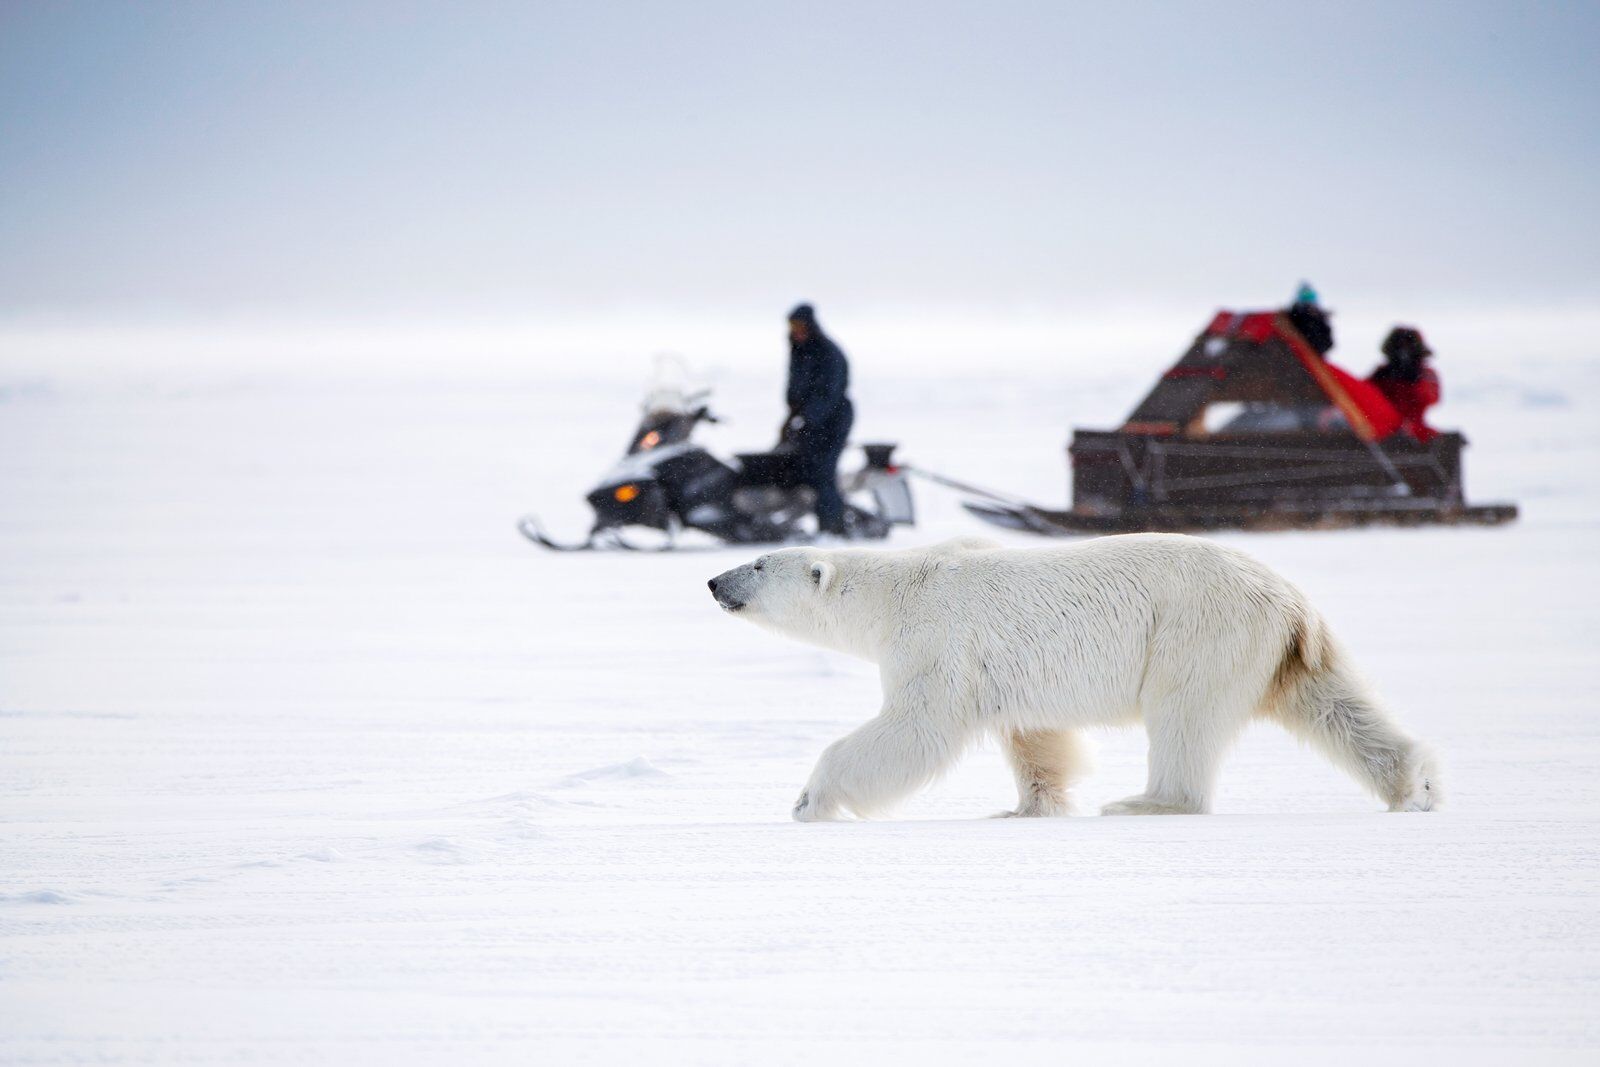 A sled driver looking at polar bears in Canada near Nunavut